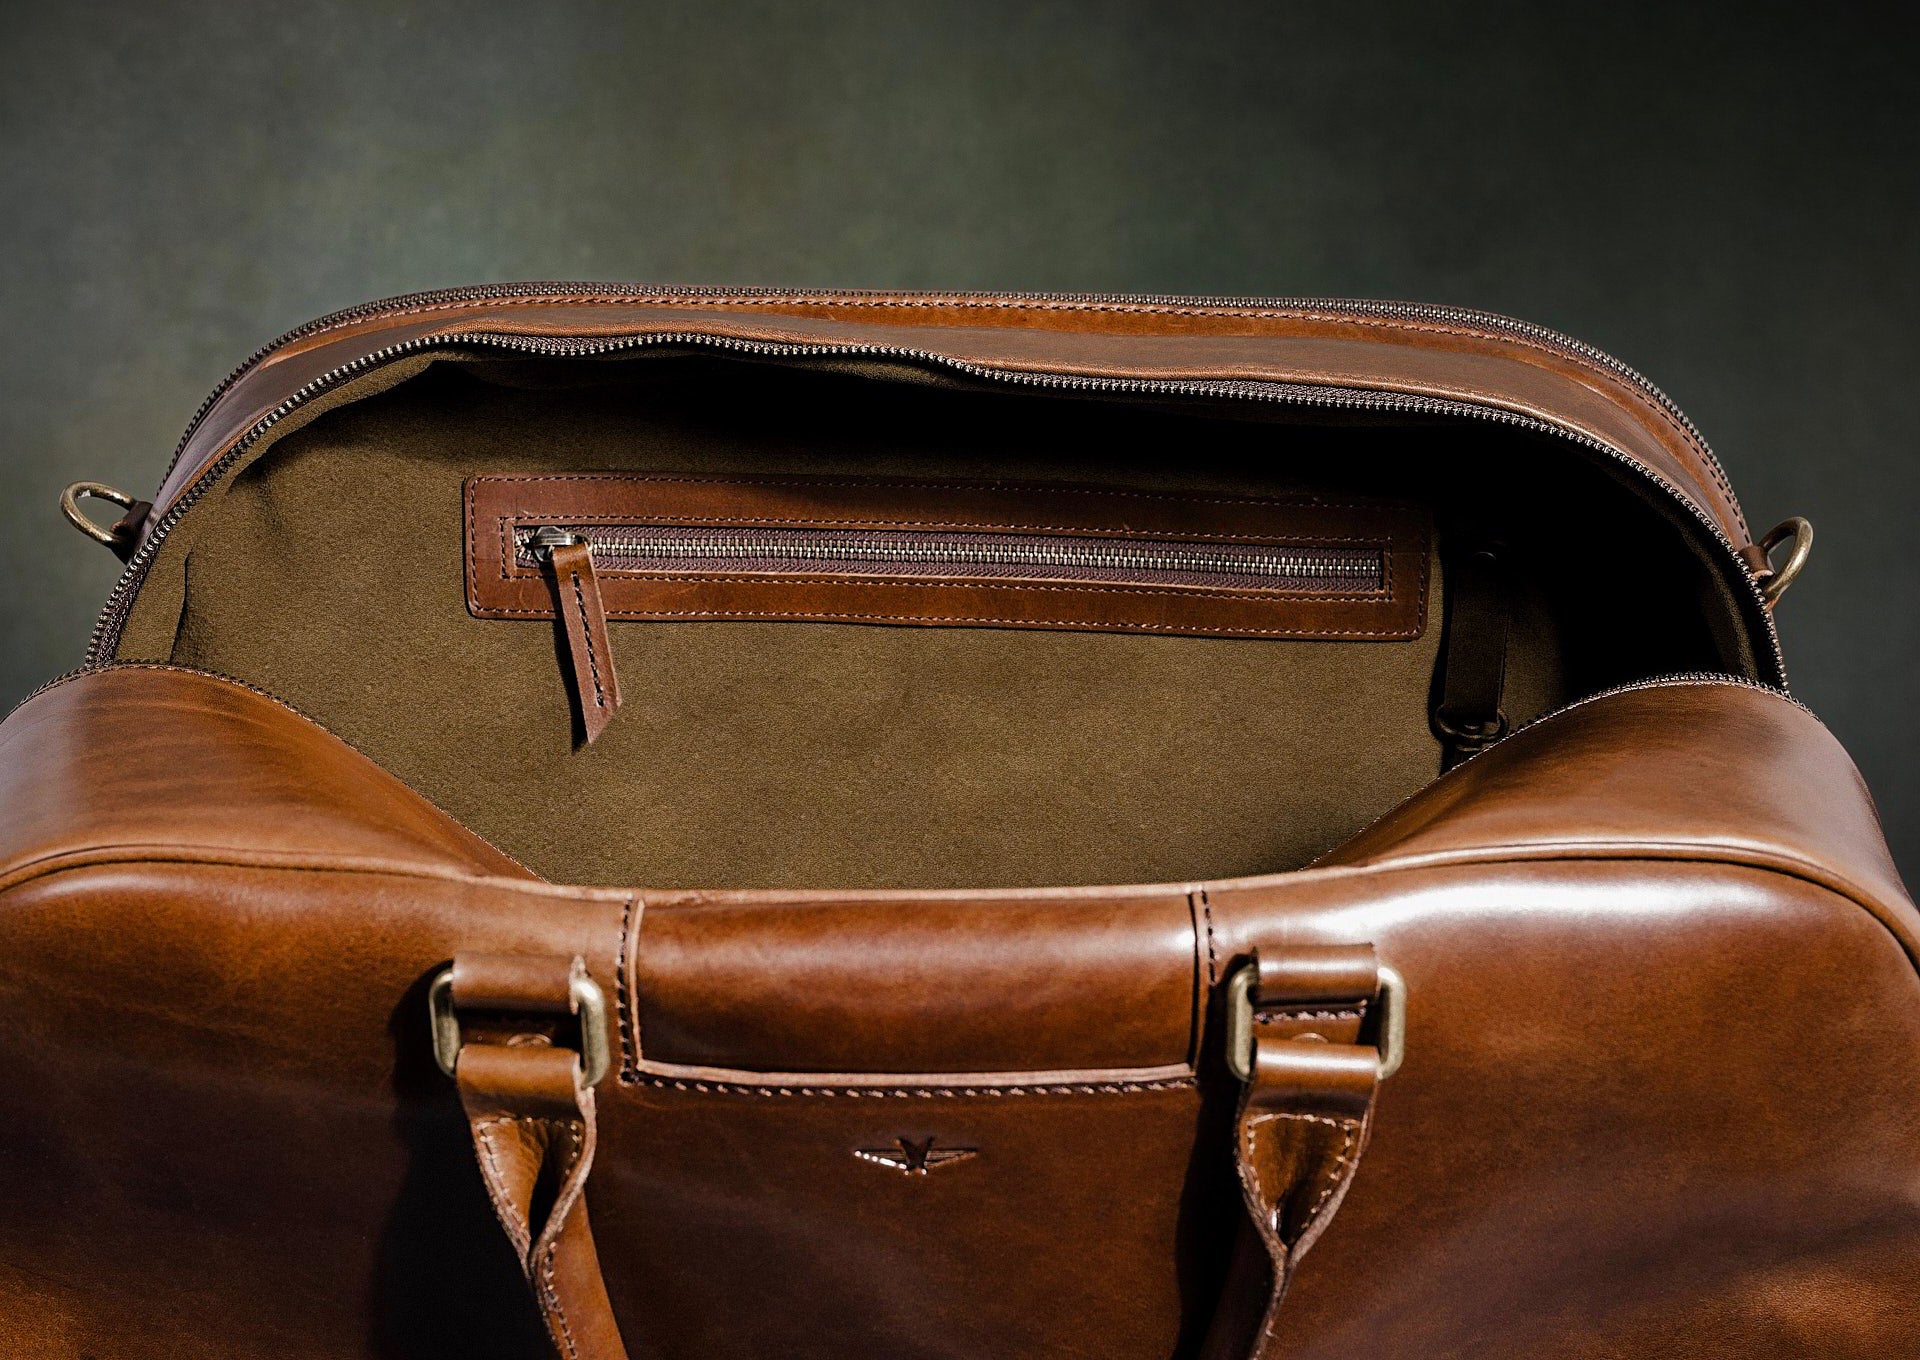 Steel Horse Leather The Bard Weekender | Handmade Leather Duffle Bag